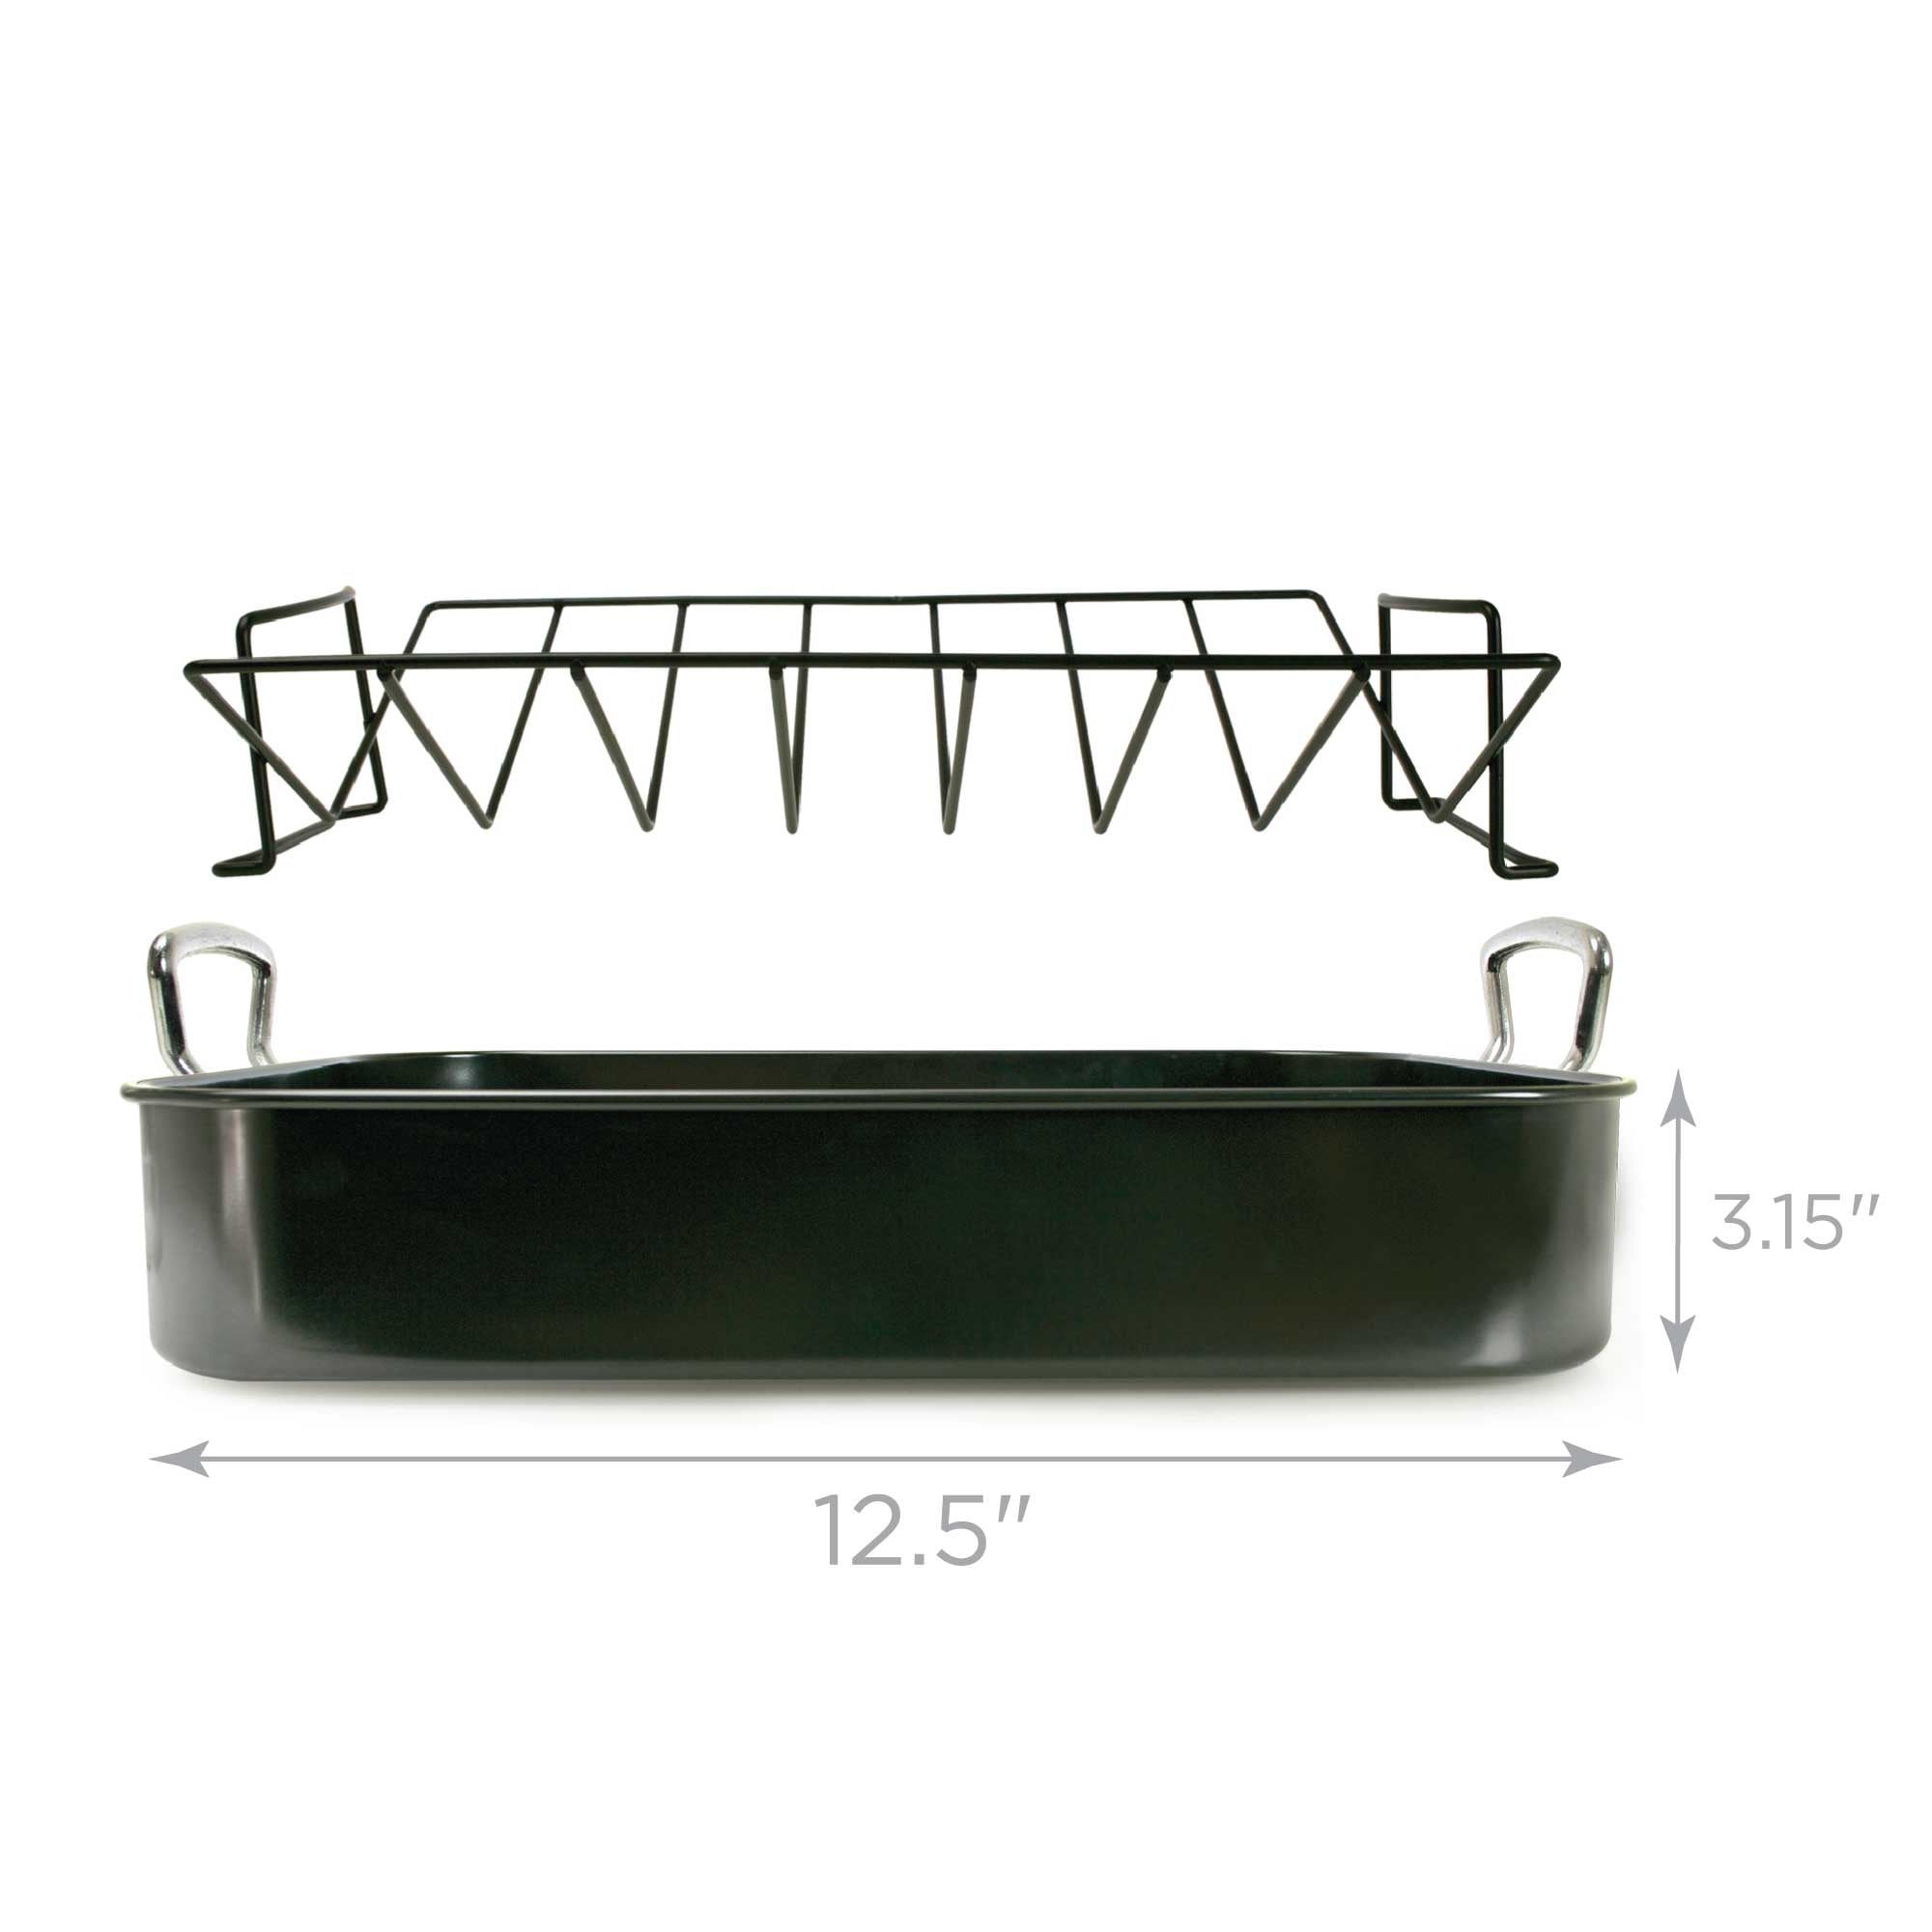 ColorLife 17'' Non-Stick Ceramics Broiler Pan with Rack